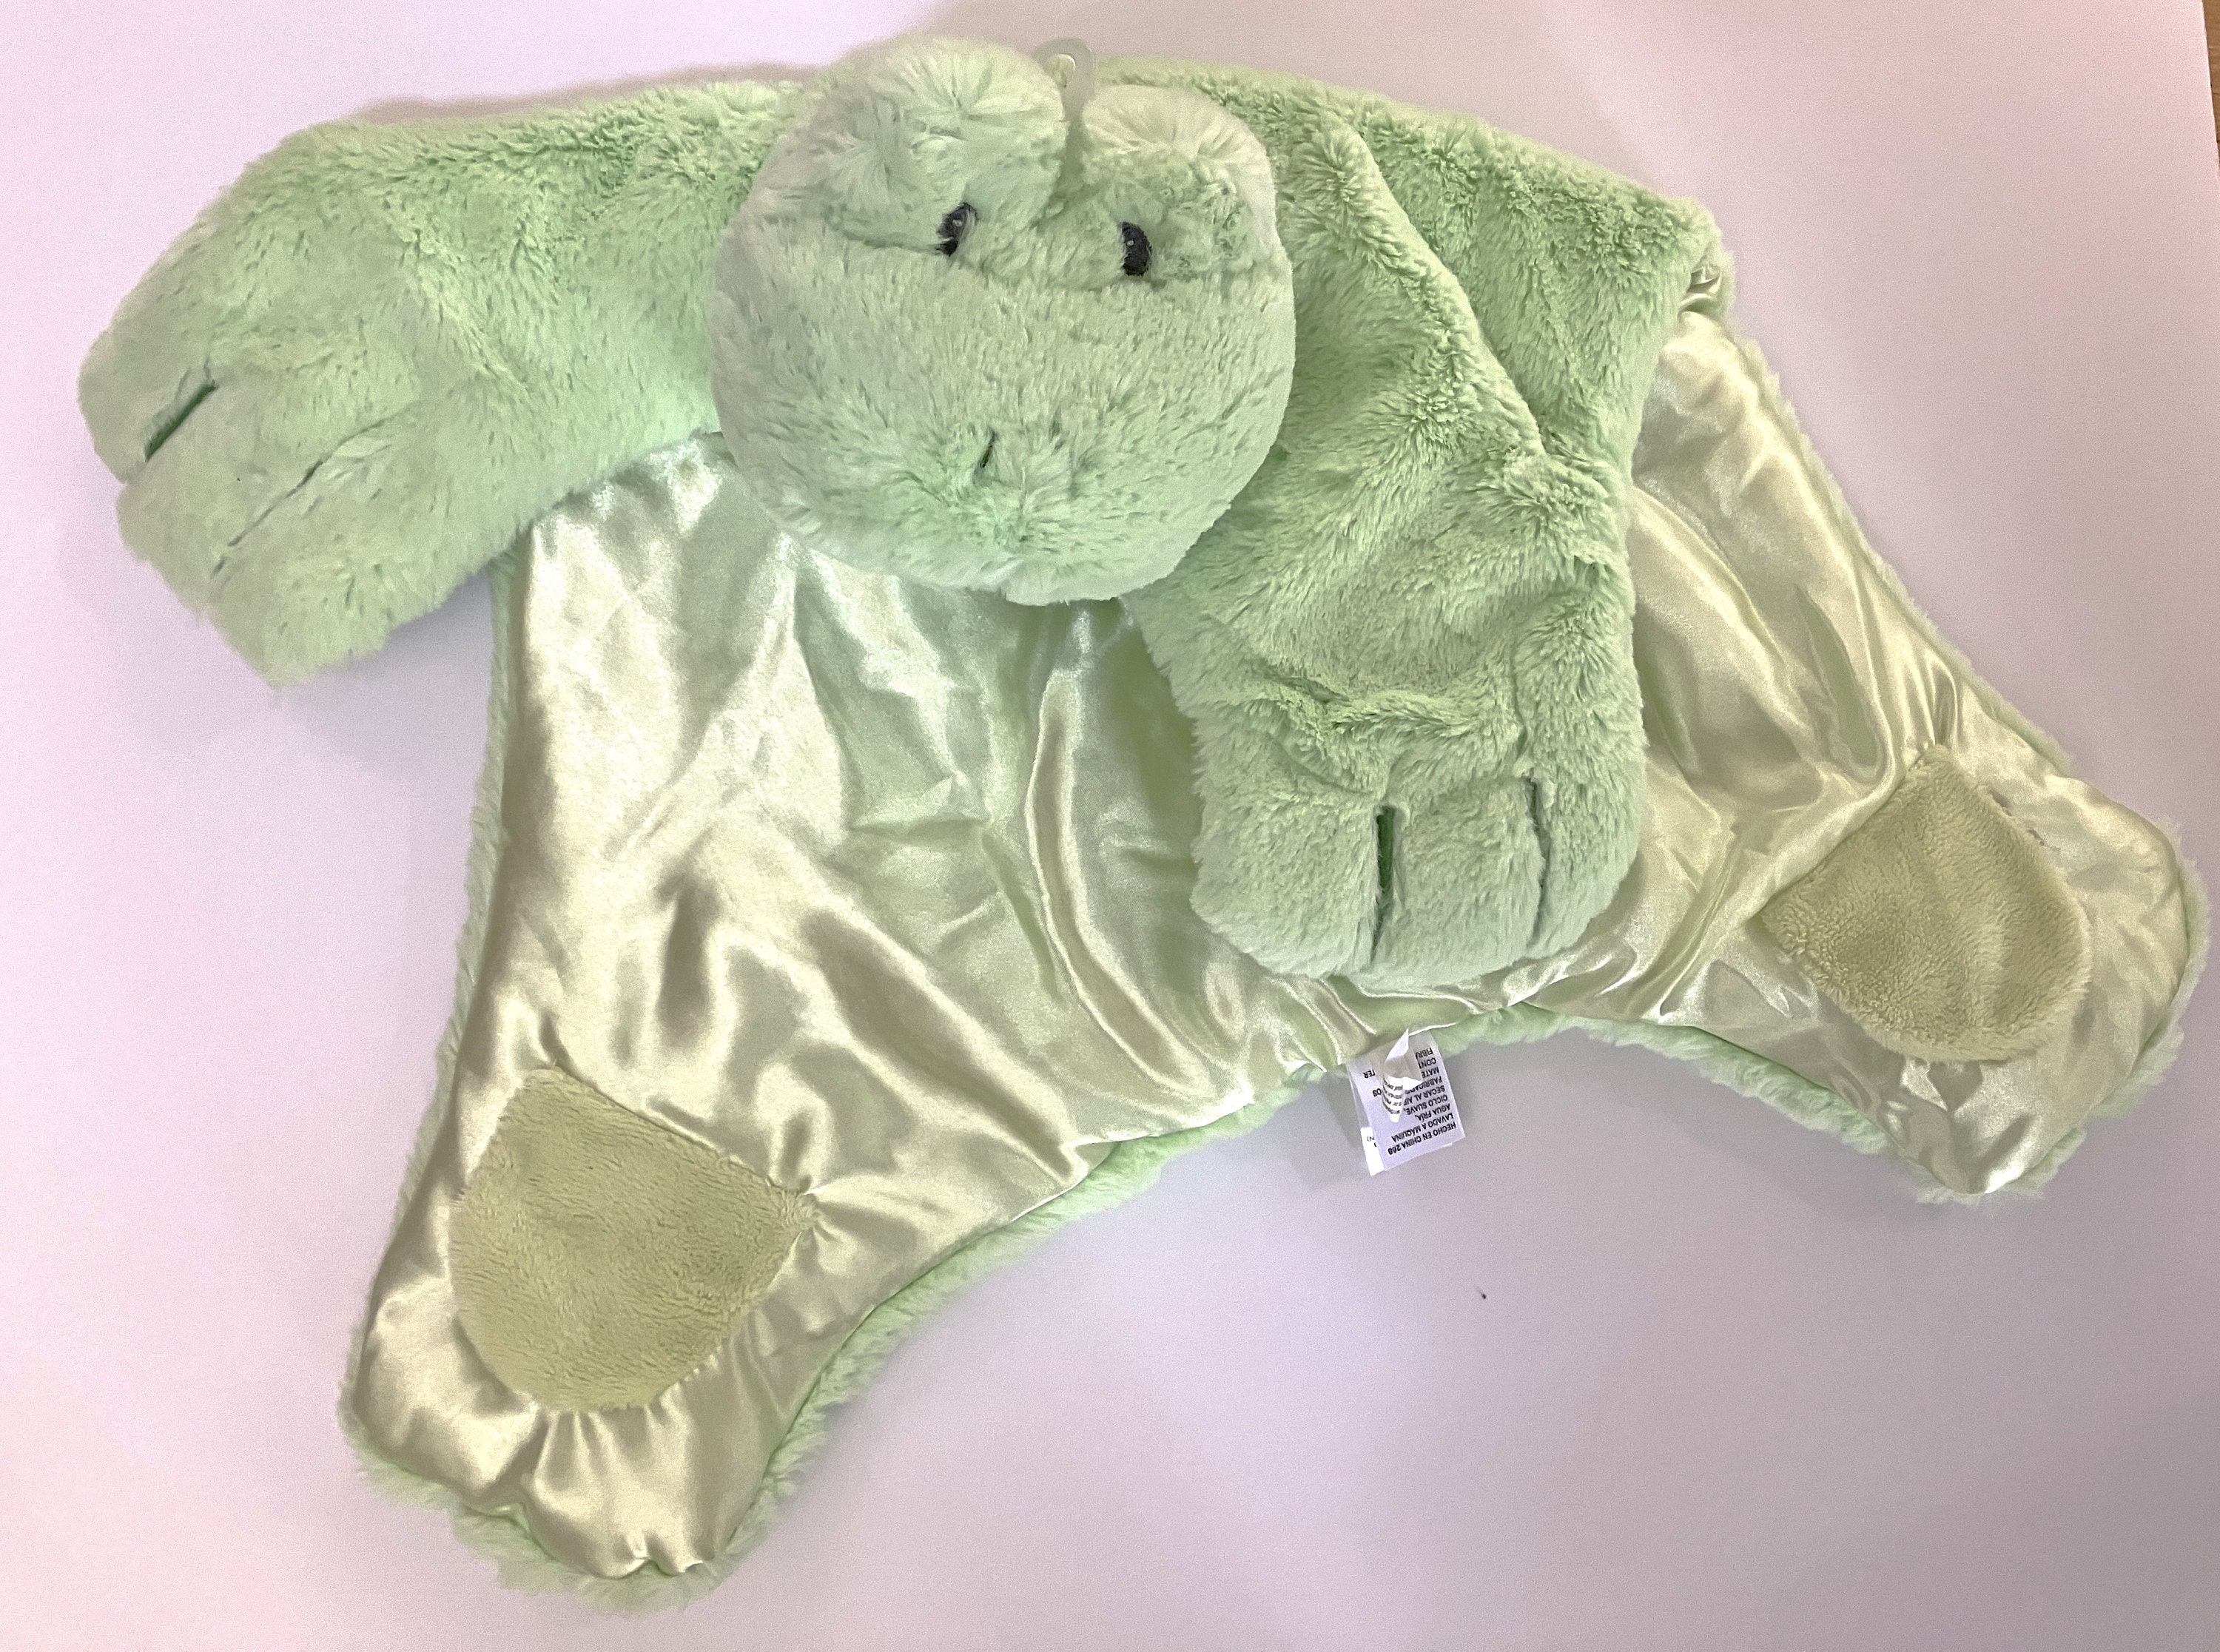 Build a Bear Workshop 18 In. Retired Jazzy Green Frog Stuffed BAB